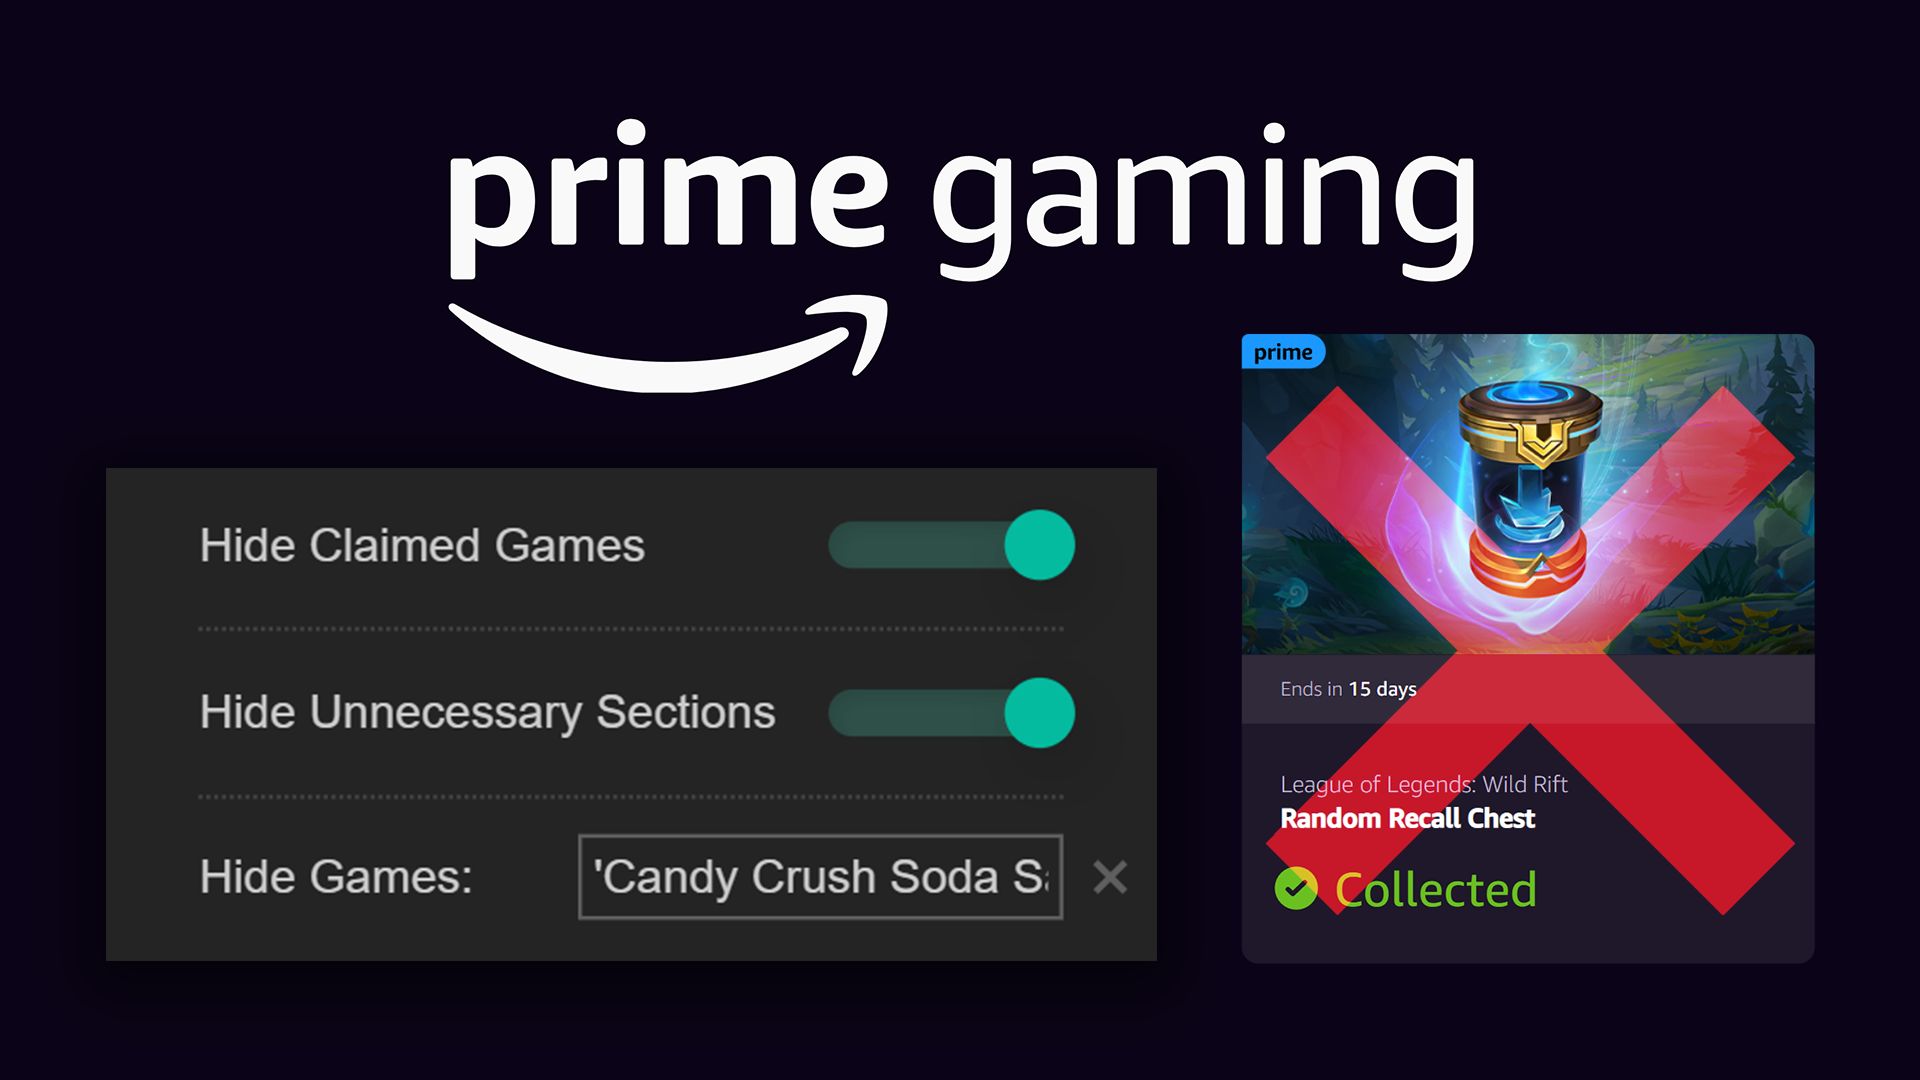 Prime Gaming hide claimed games - gaming.amazon.com screenshot